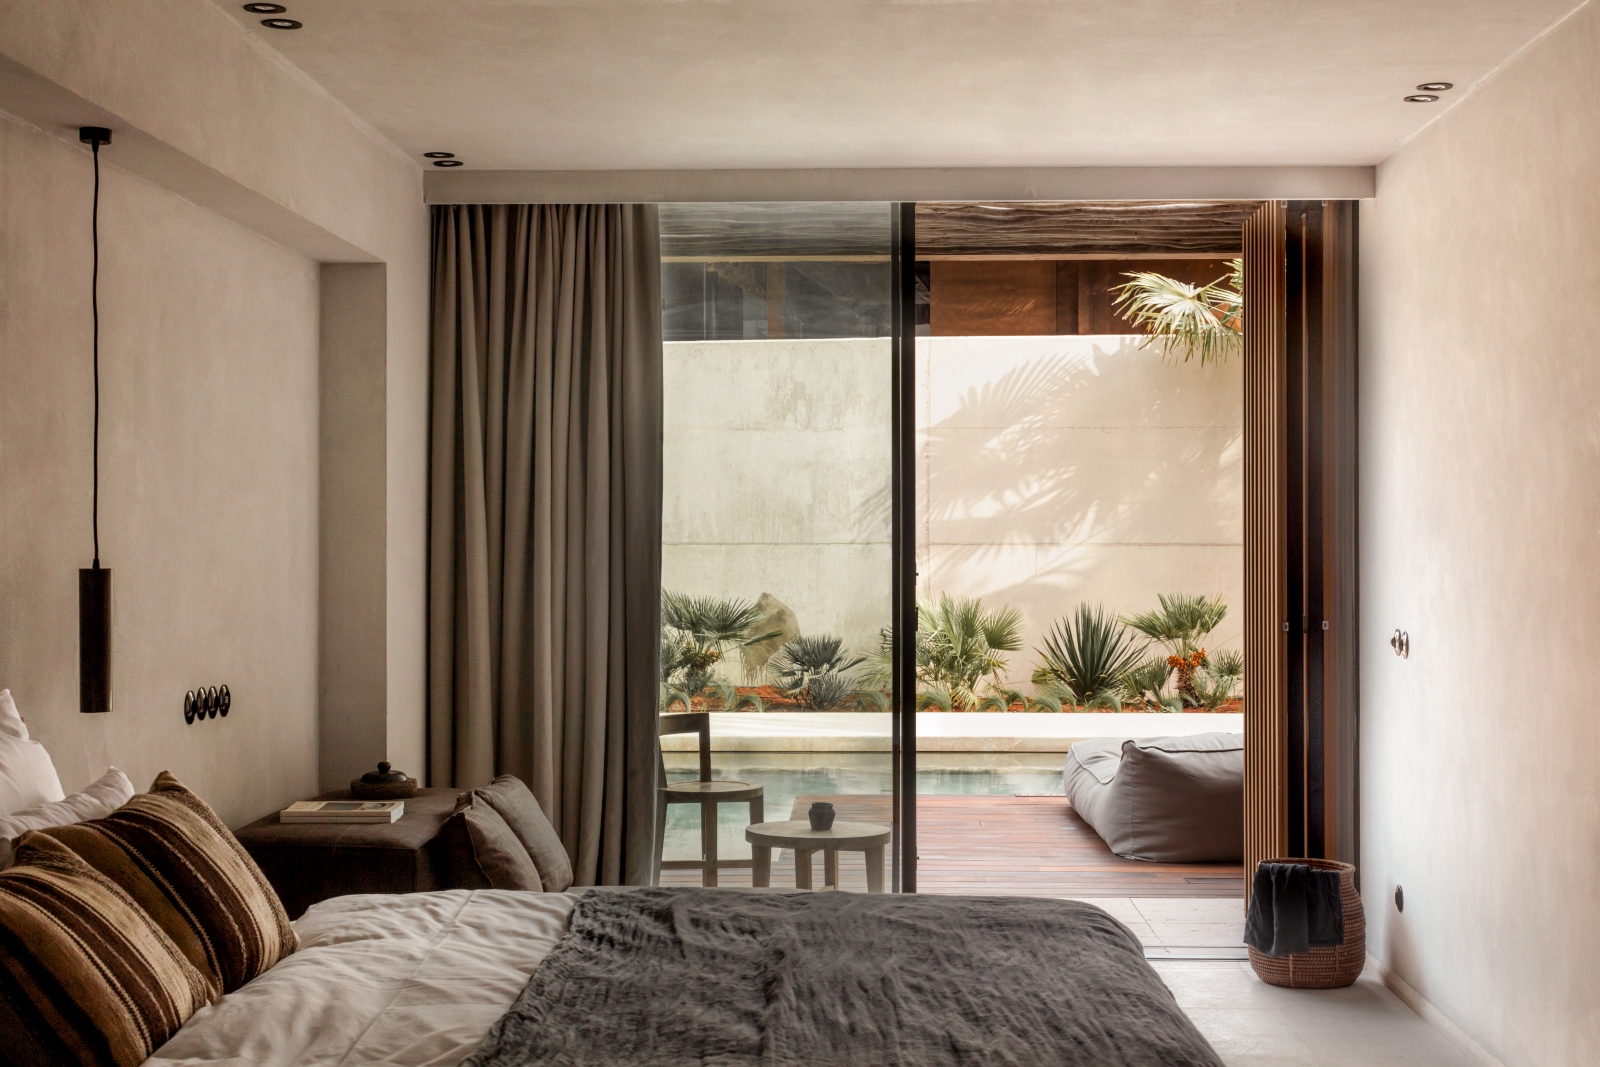 Bedroom with pool access at luxury resort OKU Ibiza